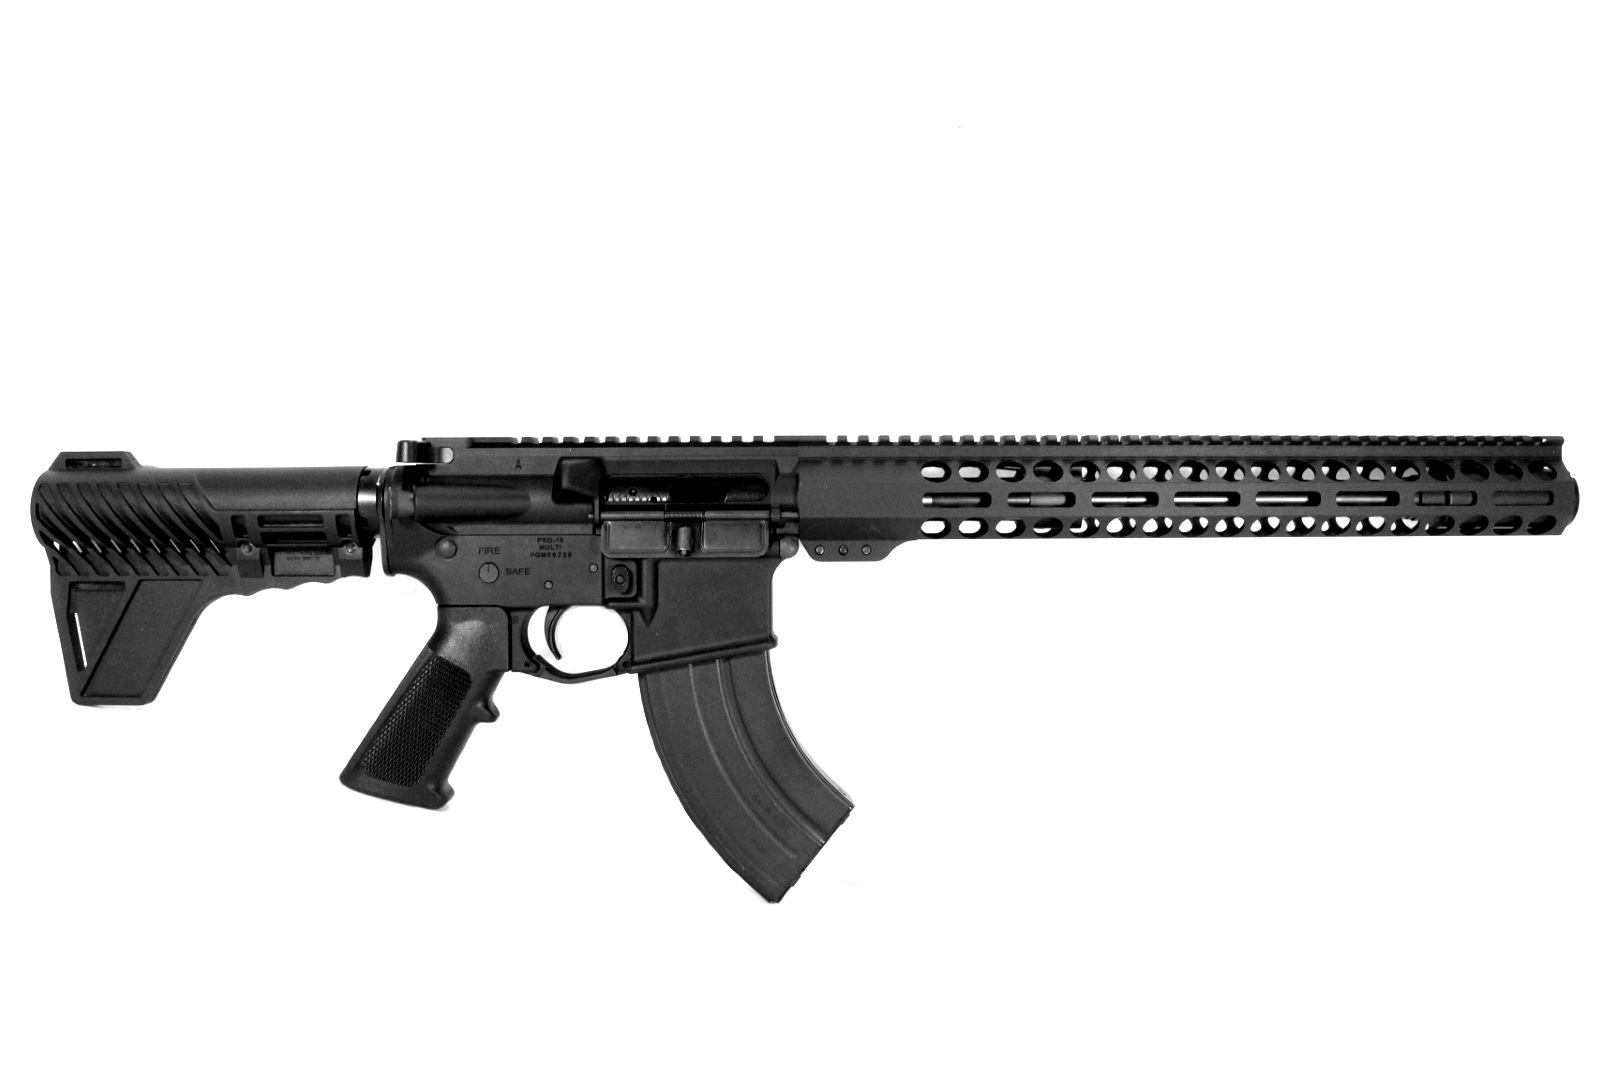 12.5 inch 9x39 Russian Caliber AR-15 Pistol | More Energy Than 300BLK